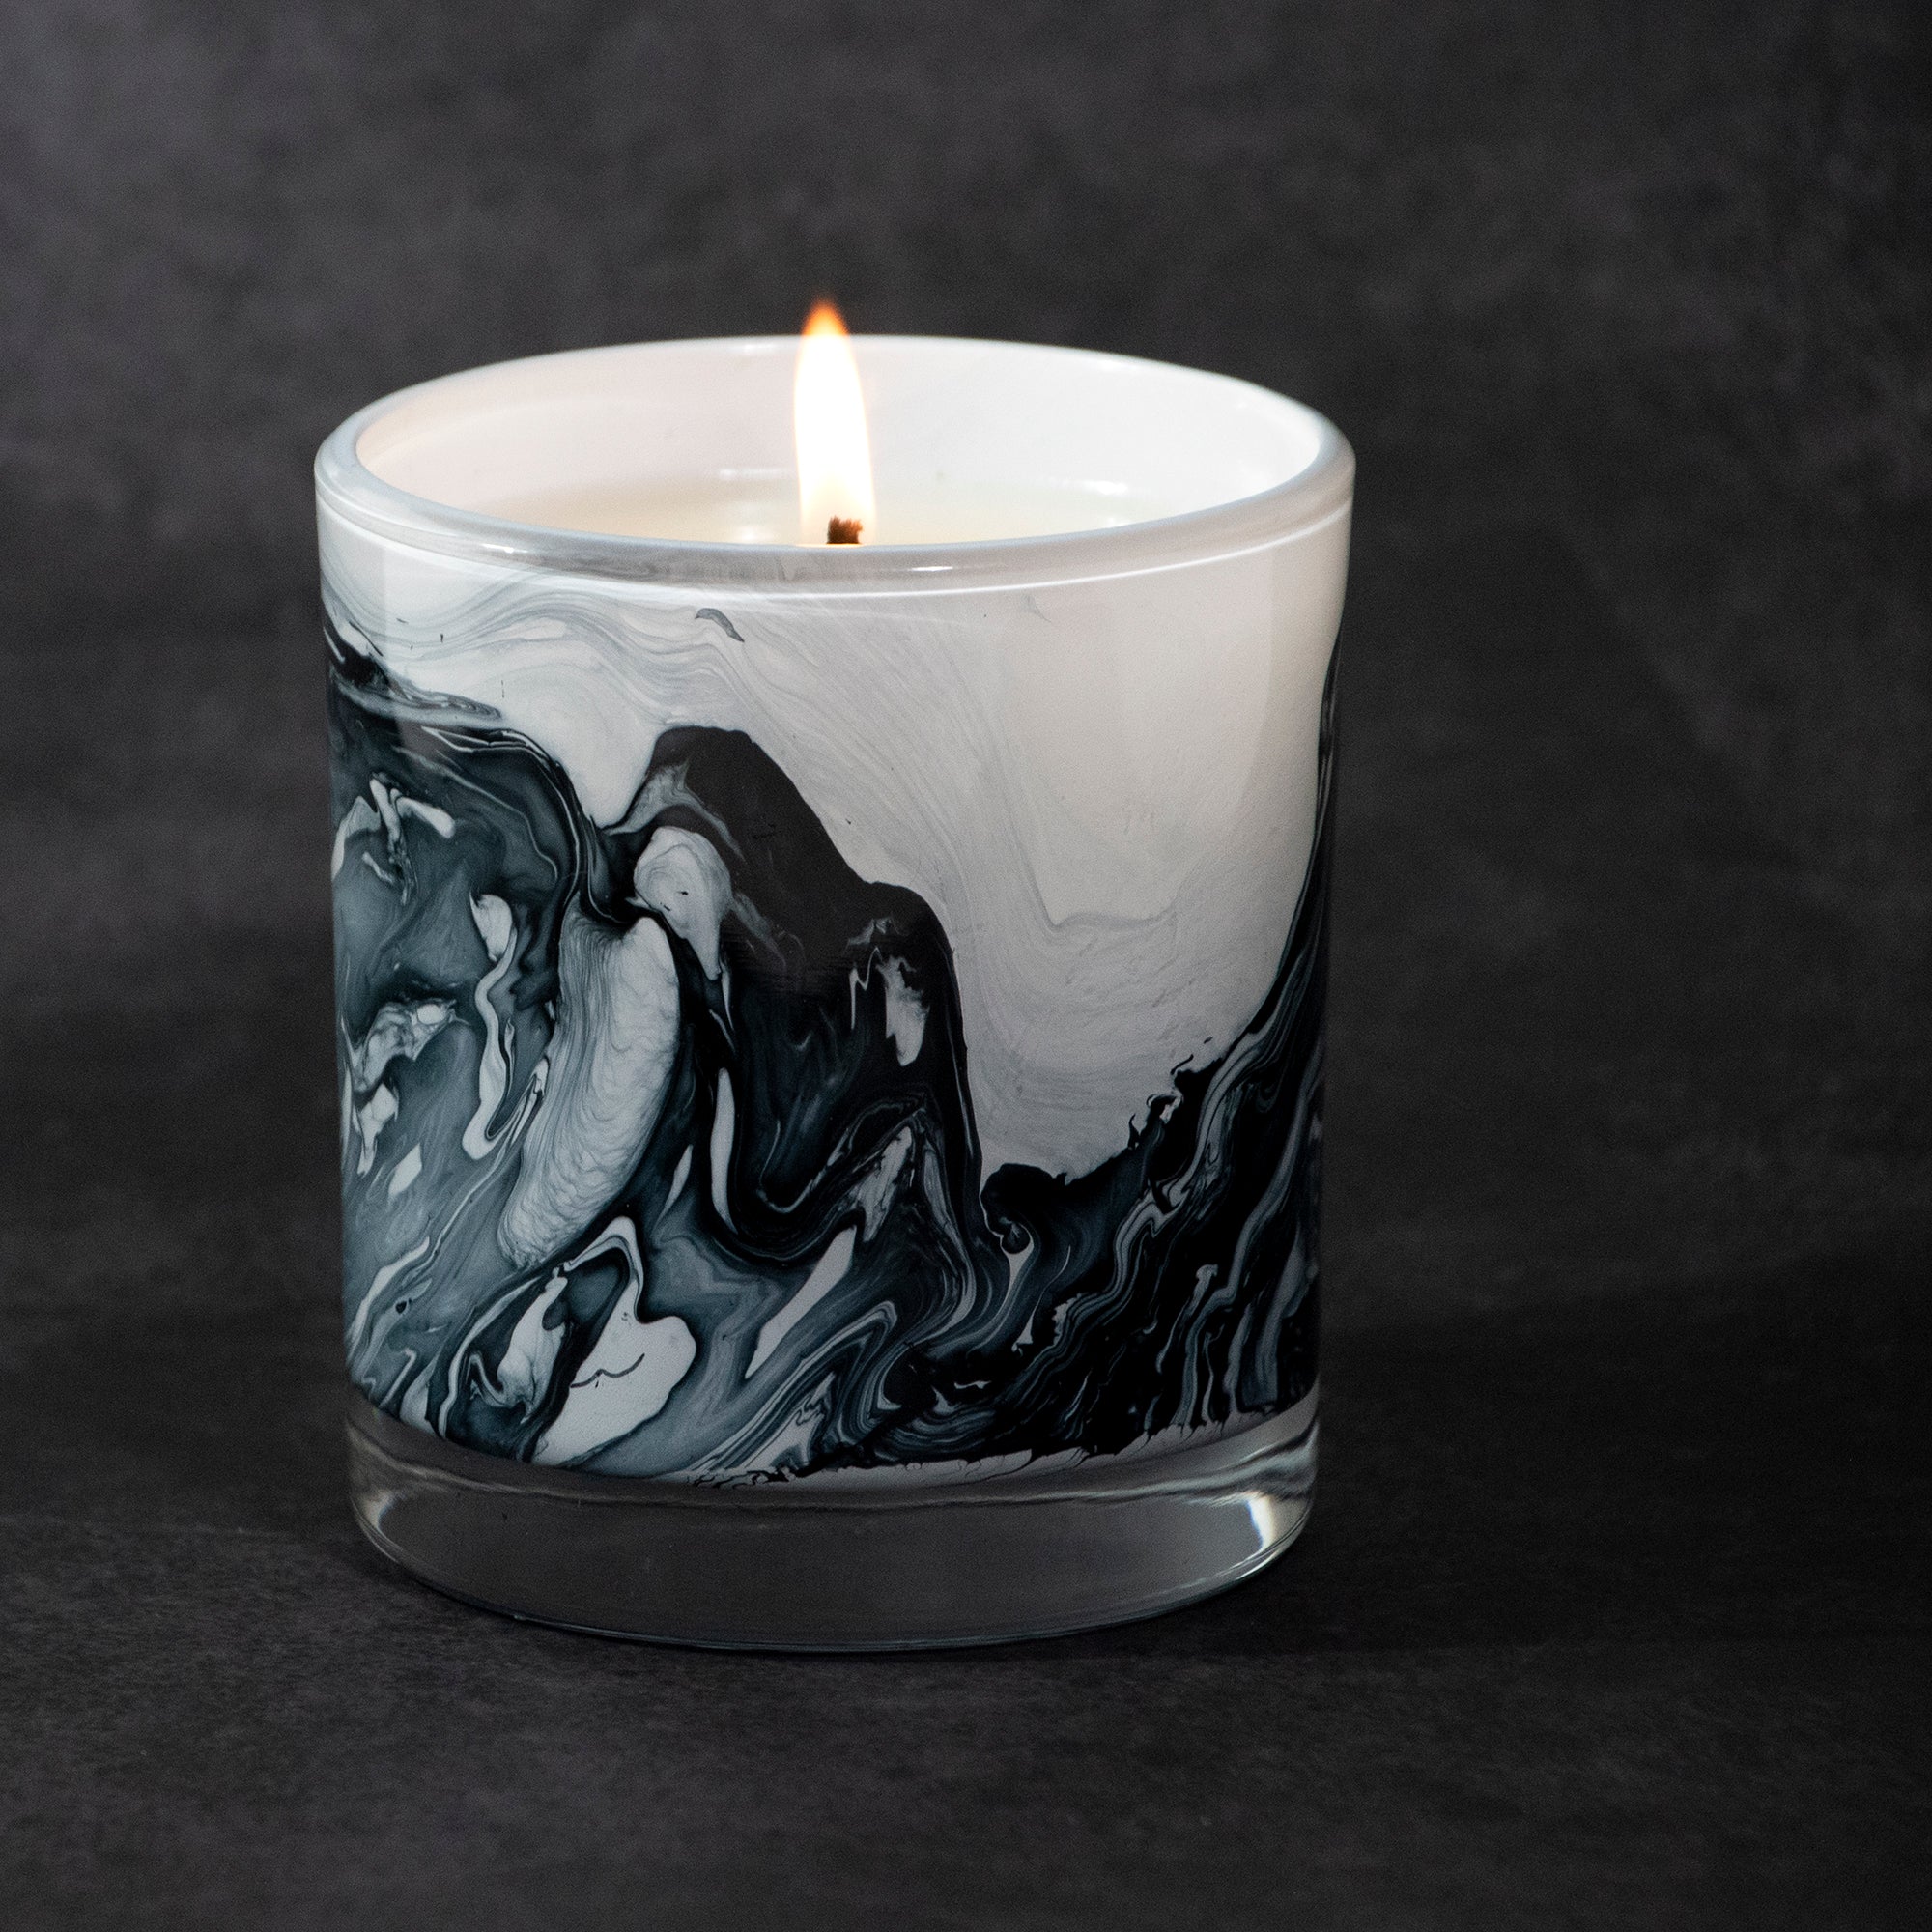 White Sage & Lily 14 oz. Swirl Glass Candle